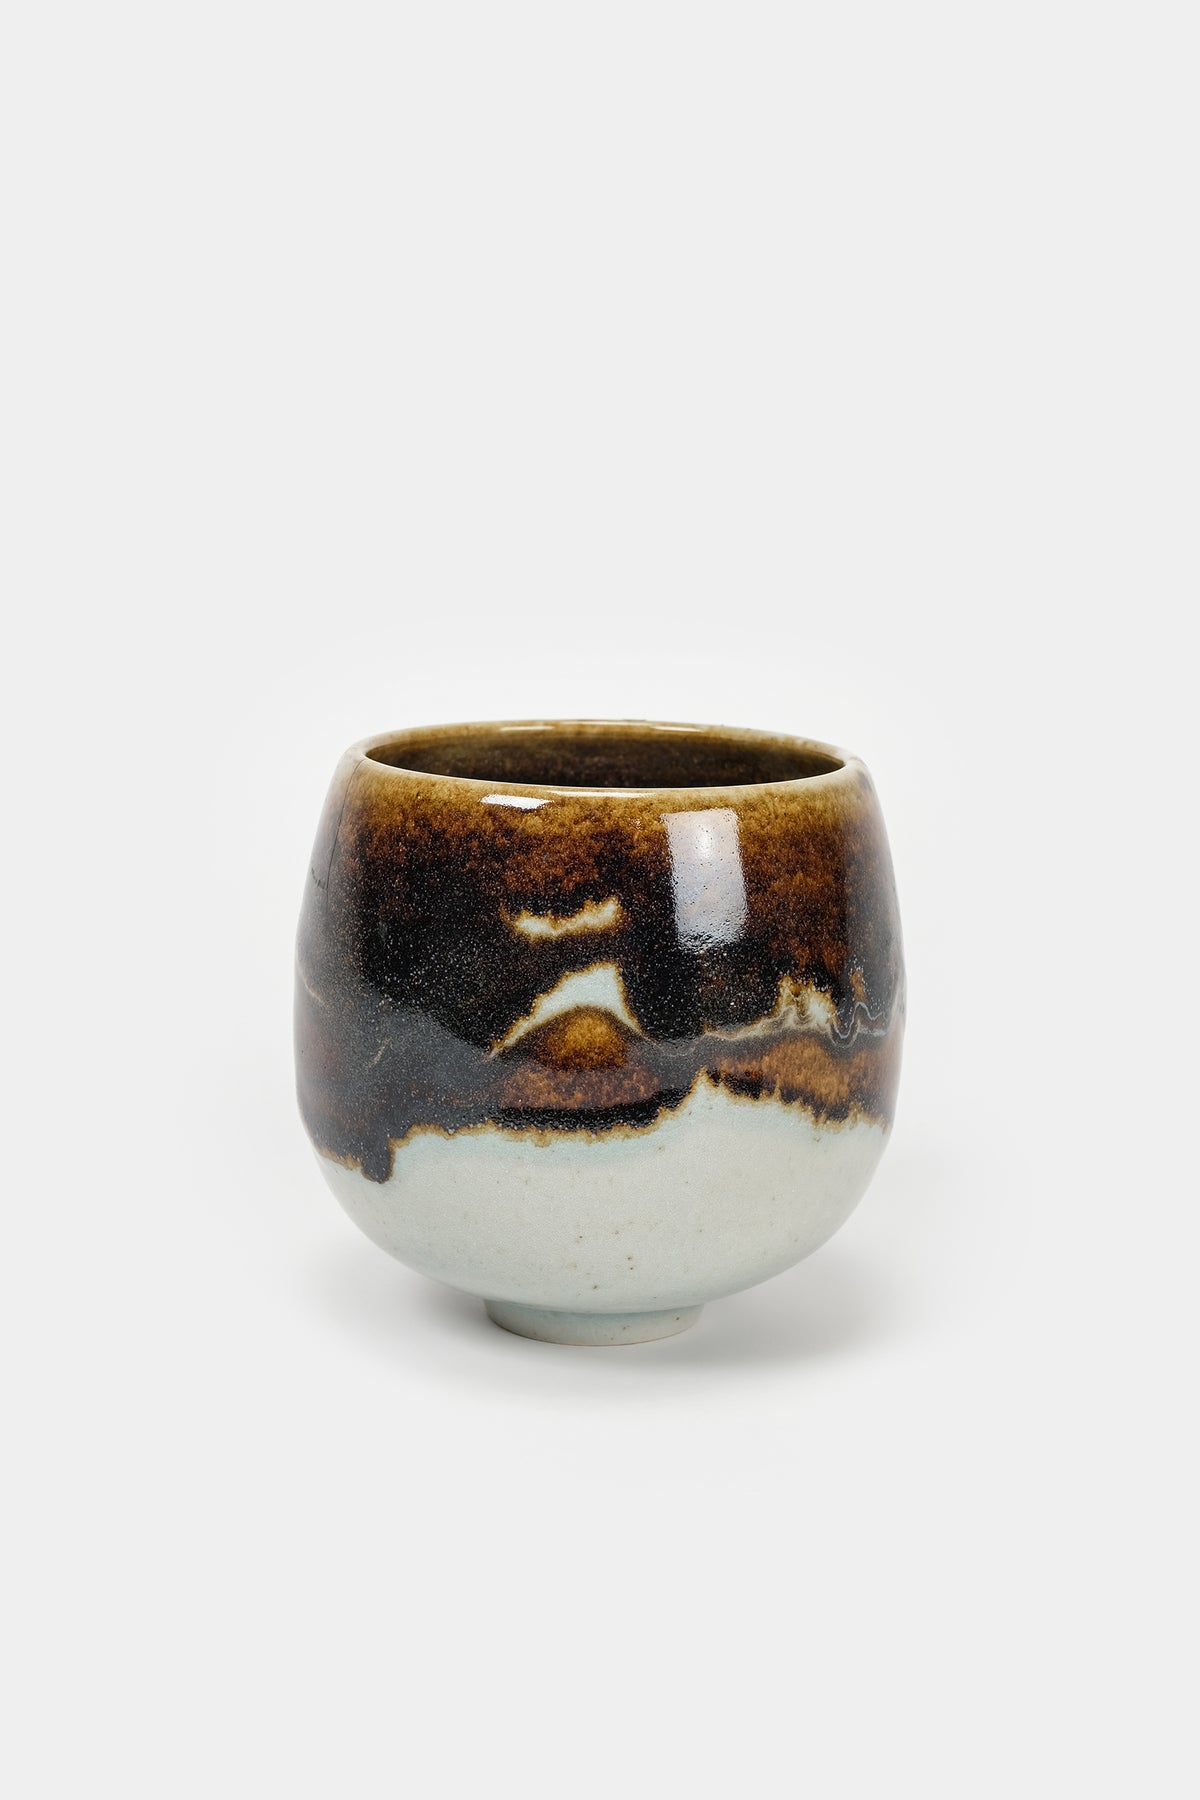 Horst Kerstan, Vase, Ceramics, Germany, 1967